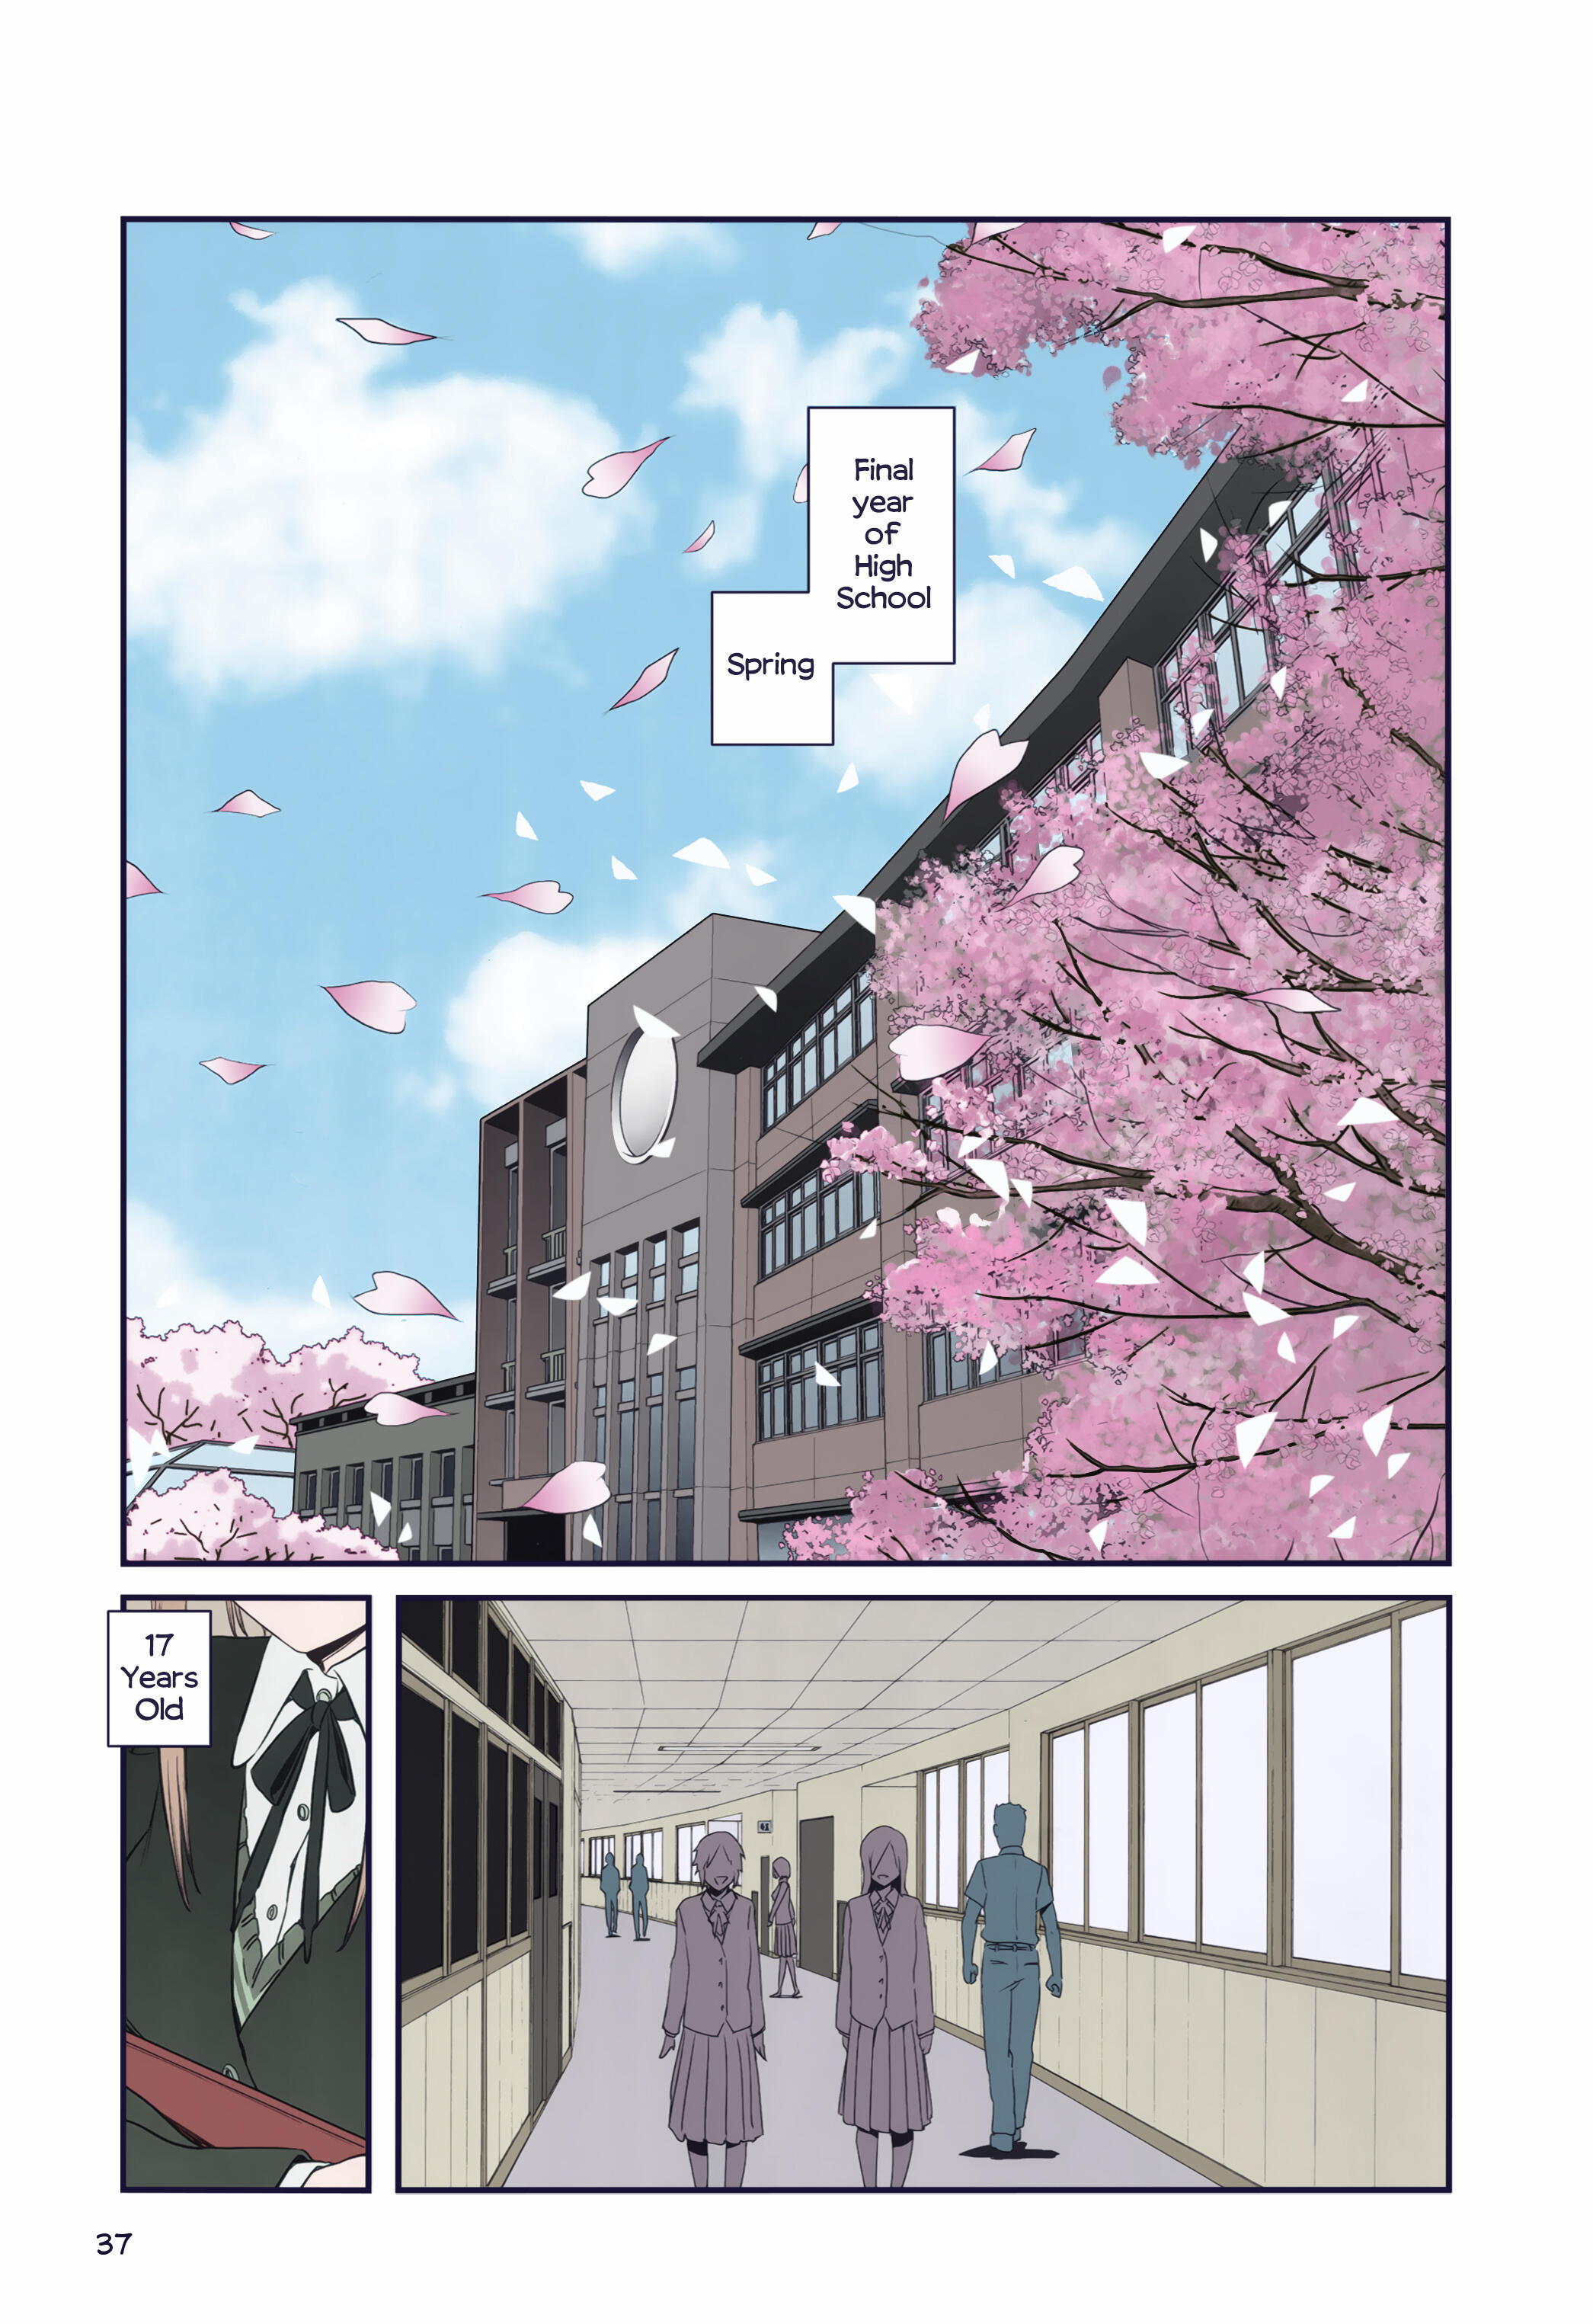 Read Getsuyoubi No Tawawa (Twitter Webcomic) (Fan Colored) Vol.2 Chapter 6:  Part Ii: Bonus - Comiket 90 Special Edition on Mangakakalot